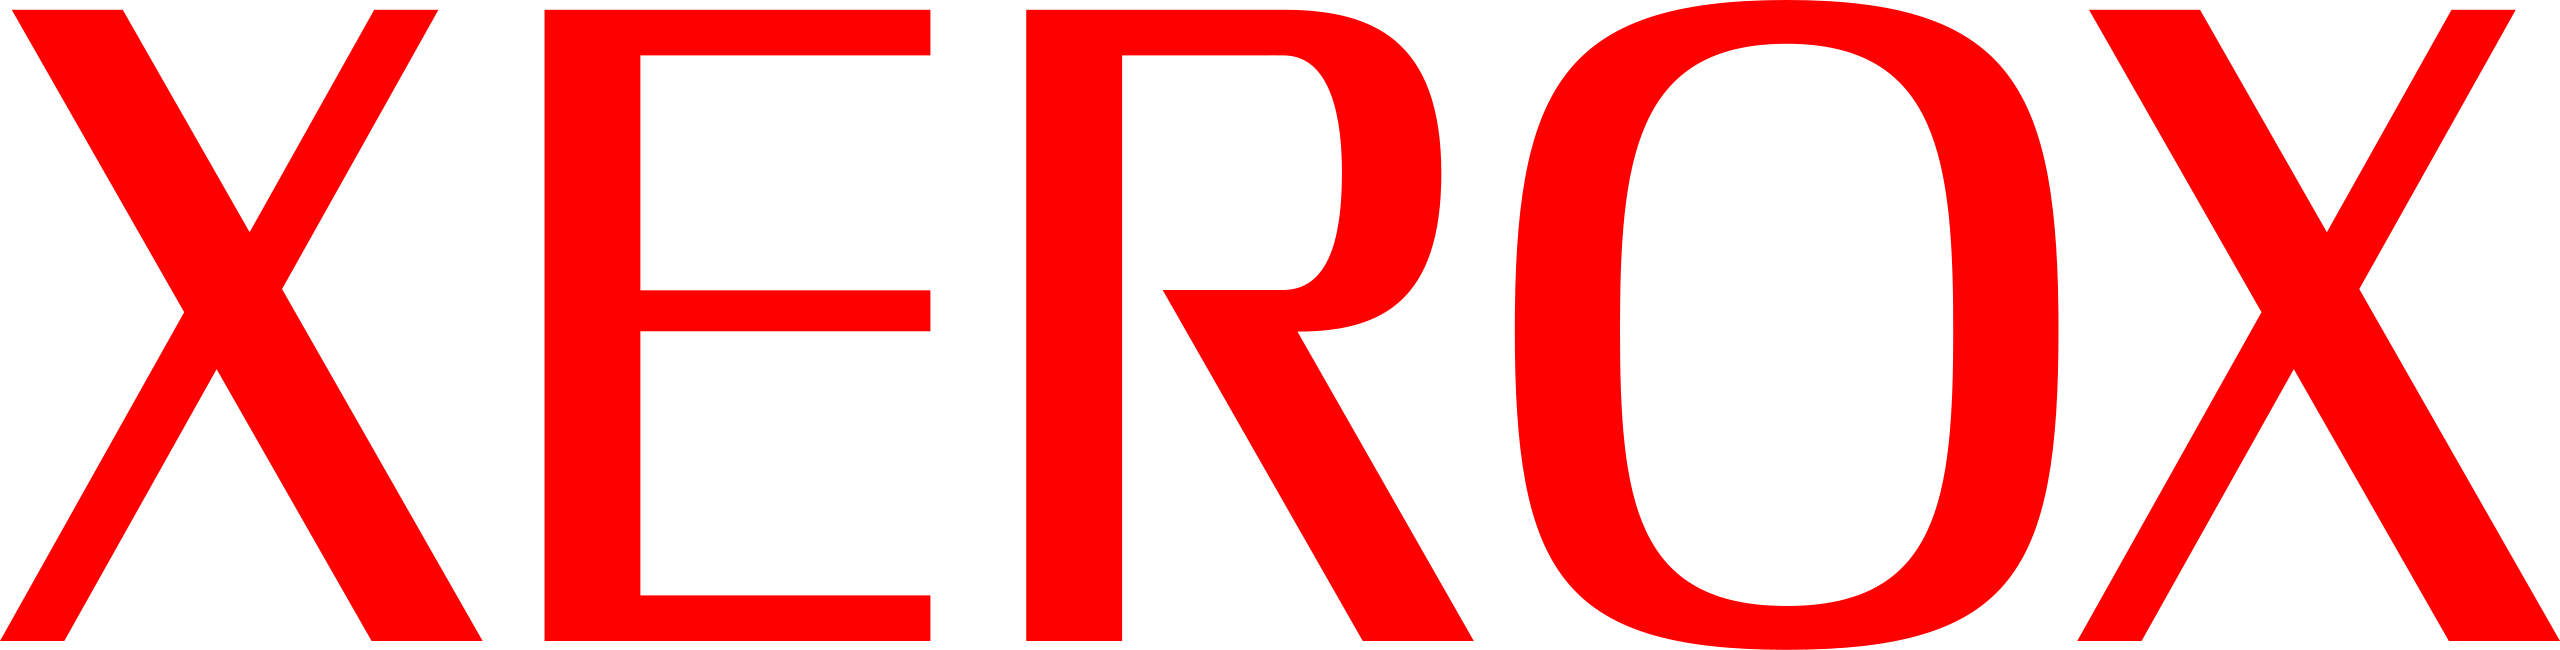 file:xerox logo (1968-2008).svg - wikimedia commons